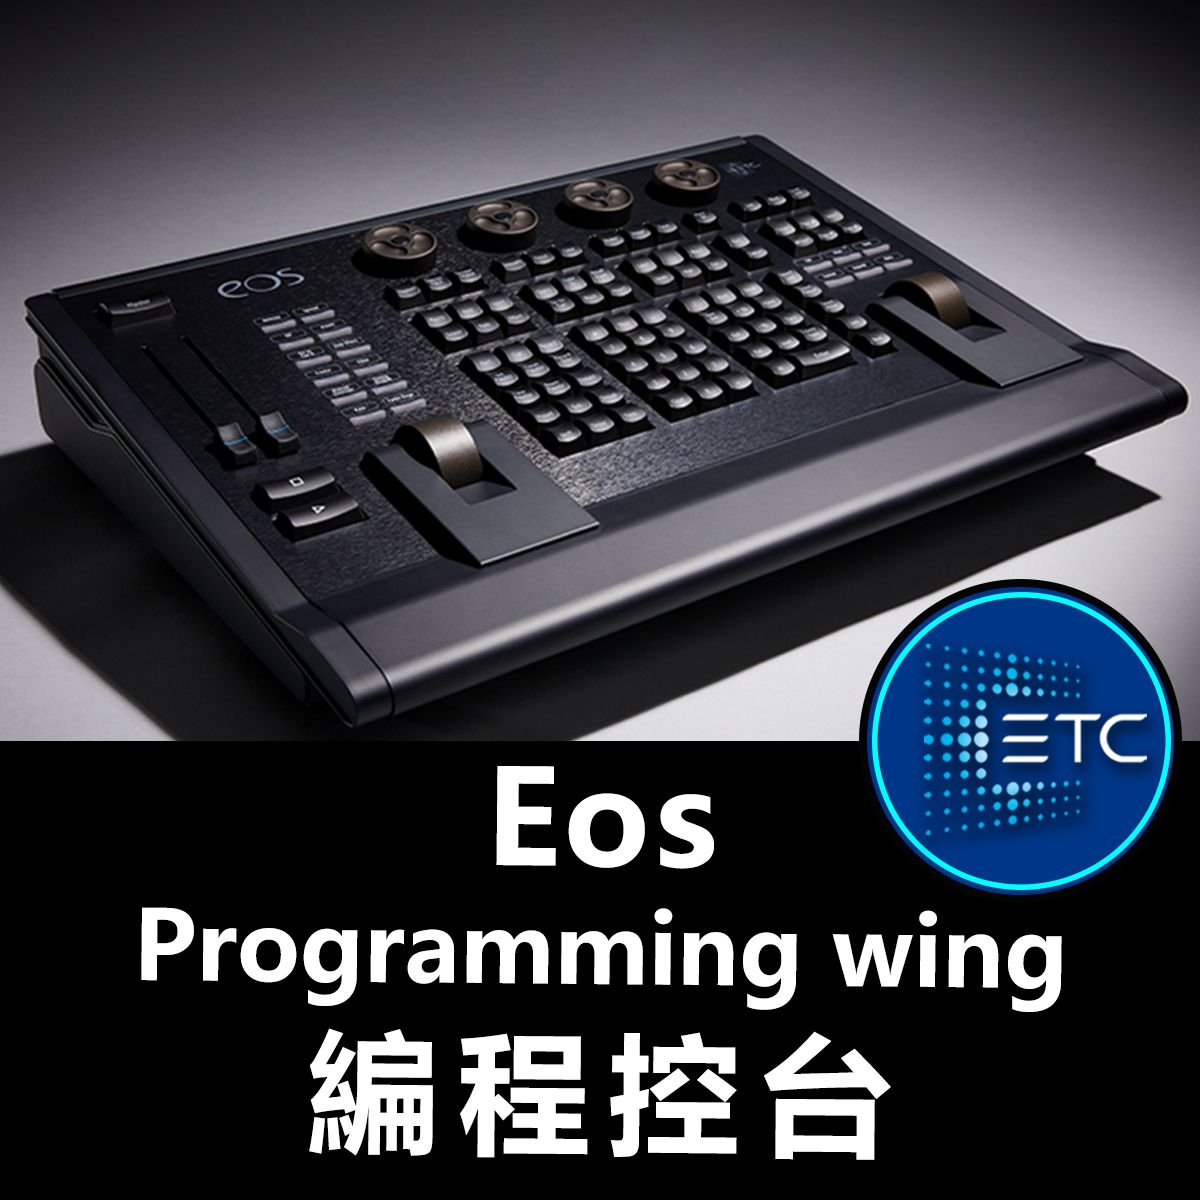 ETC Eos Programming wing 編程控台